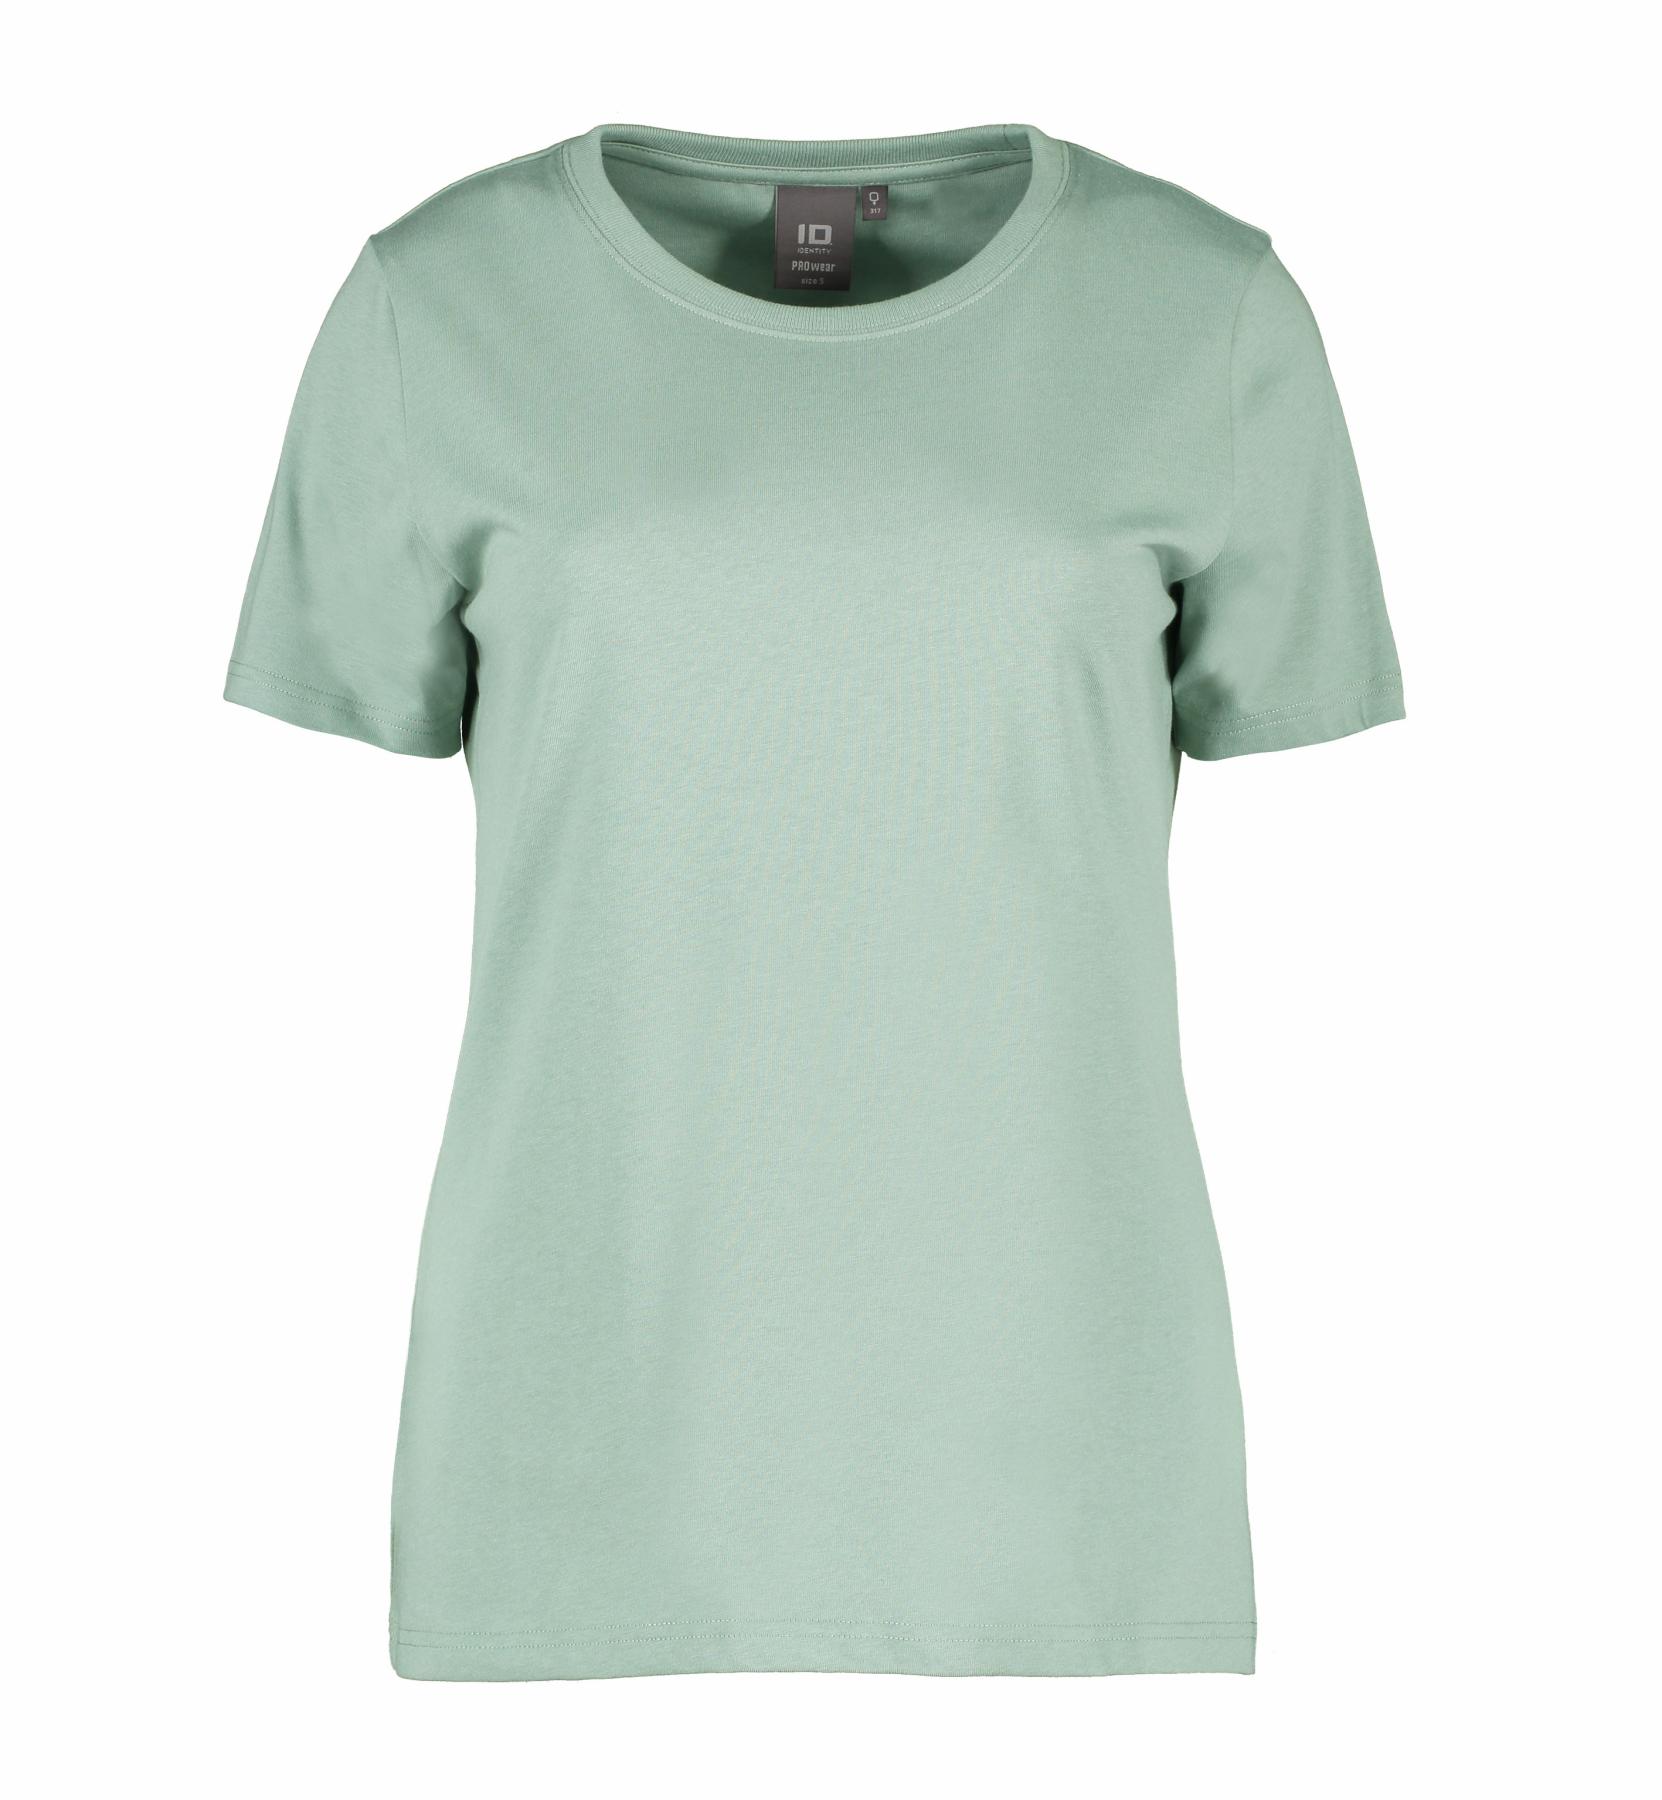 PRO Wear Ladies Work T-Shirt 175 g/m² ID Identity® Old Green M